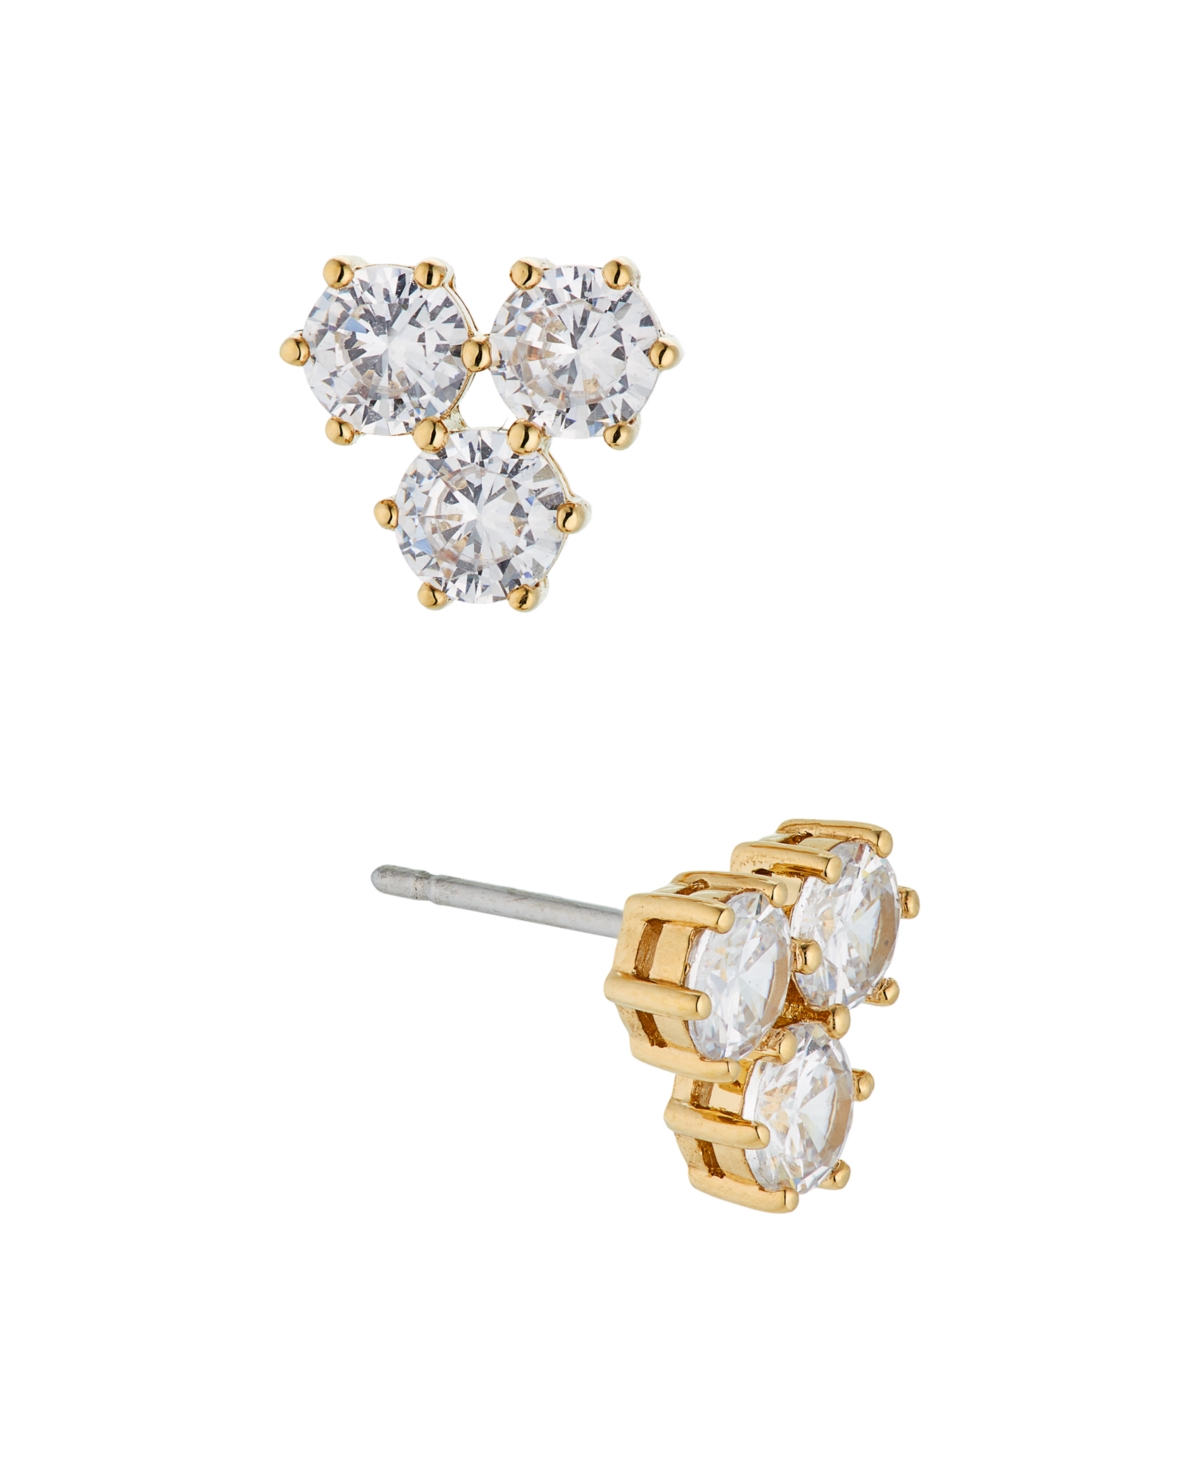 Eliot Danori Triple Stone Cubic Zirconia Stud Earrings, Created For Macy's In Gold